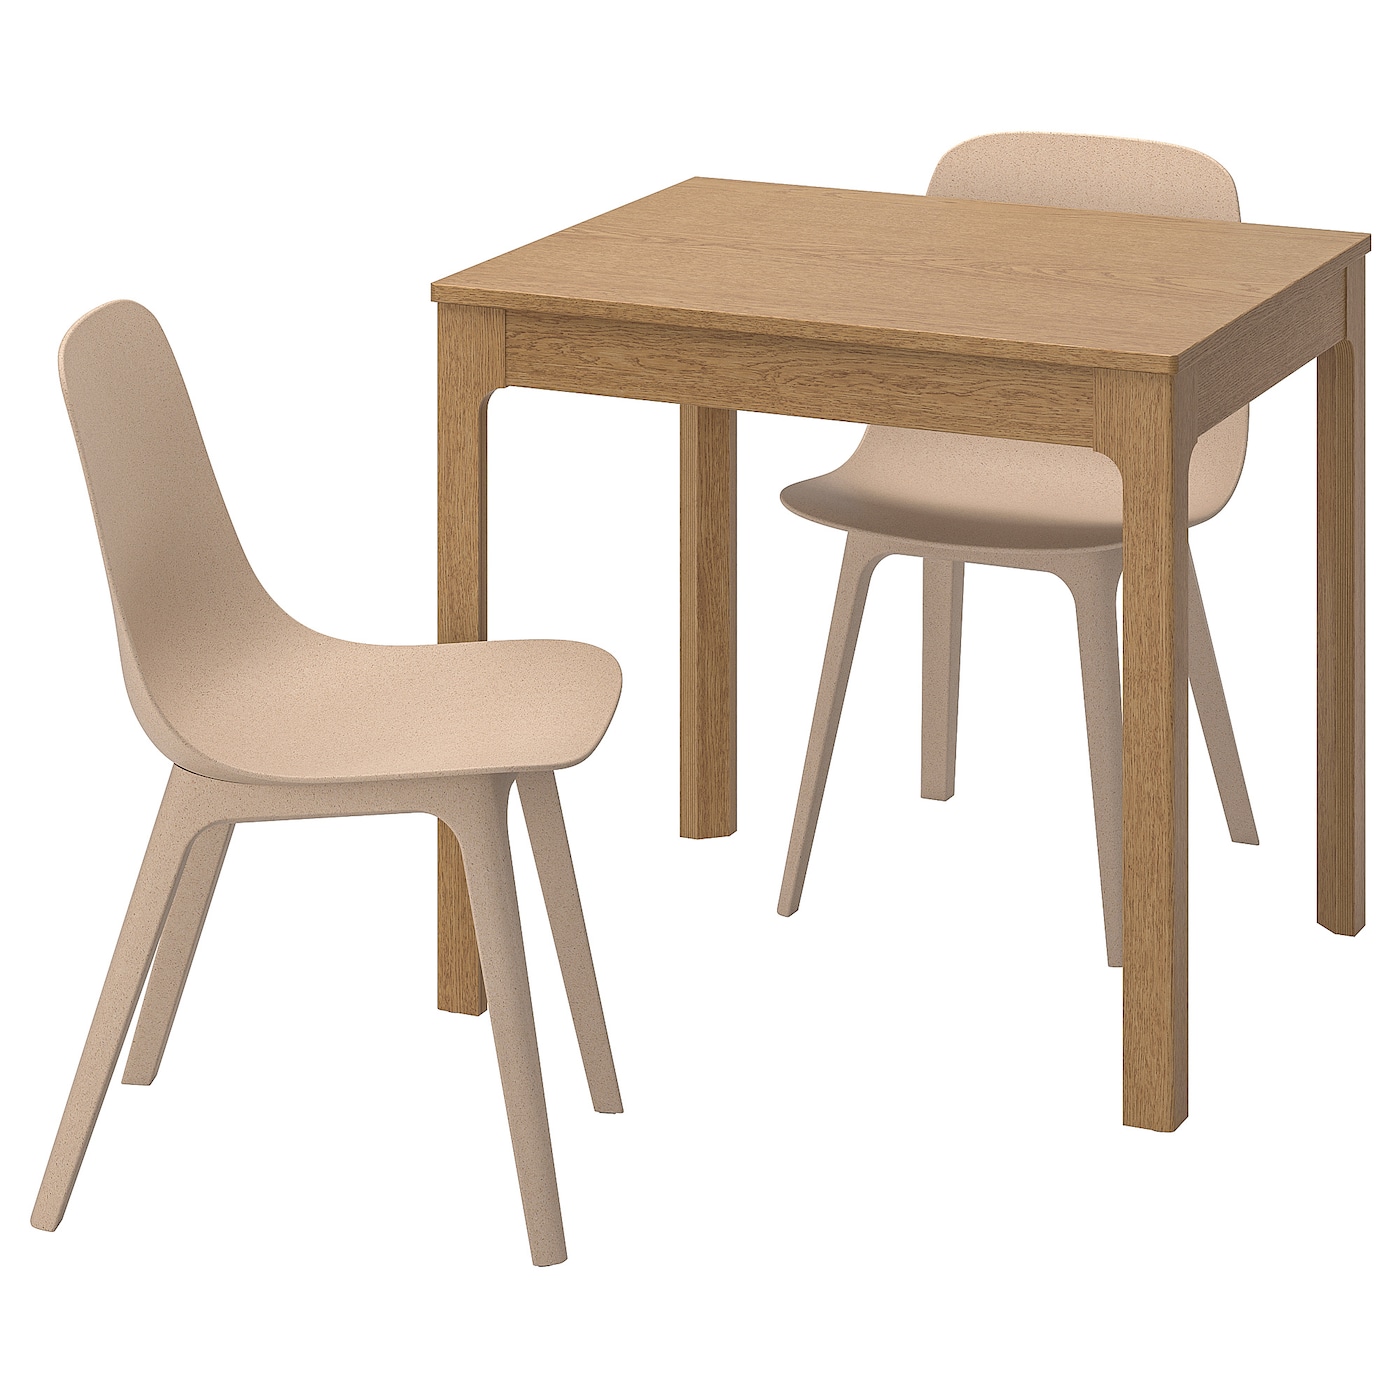 Стол и 2 стула - IKEA EKEDALEN/ODGER/ЭКЕДАЛЕН/ОДГЕР ИКЕА, 120х80 см, дуб/бежевый